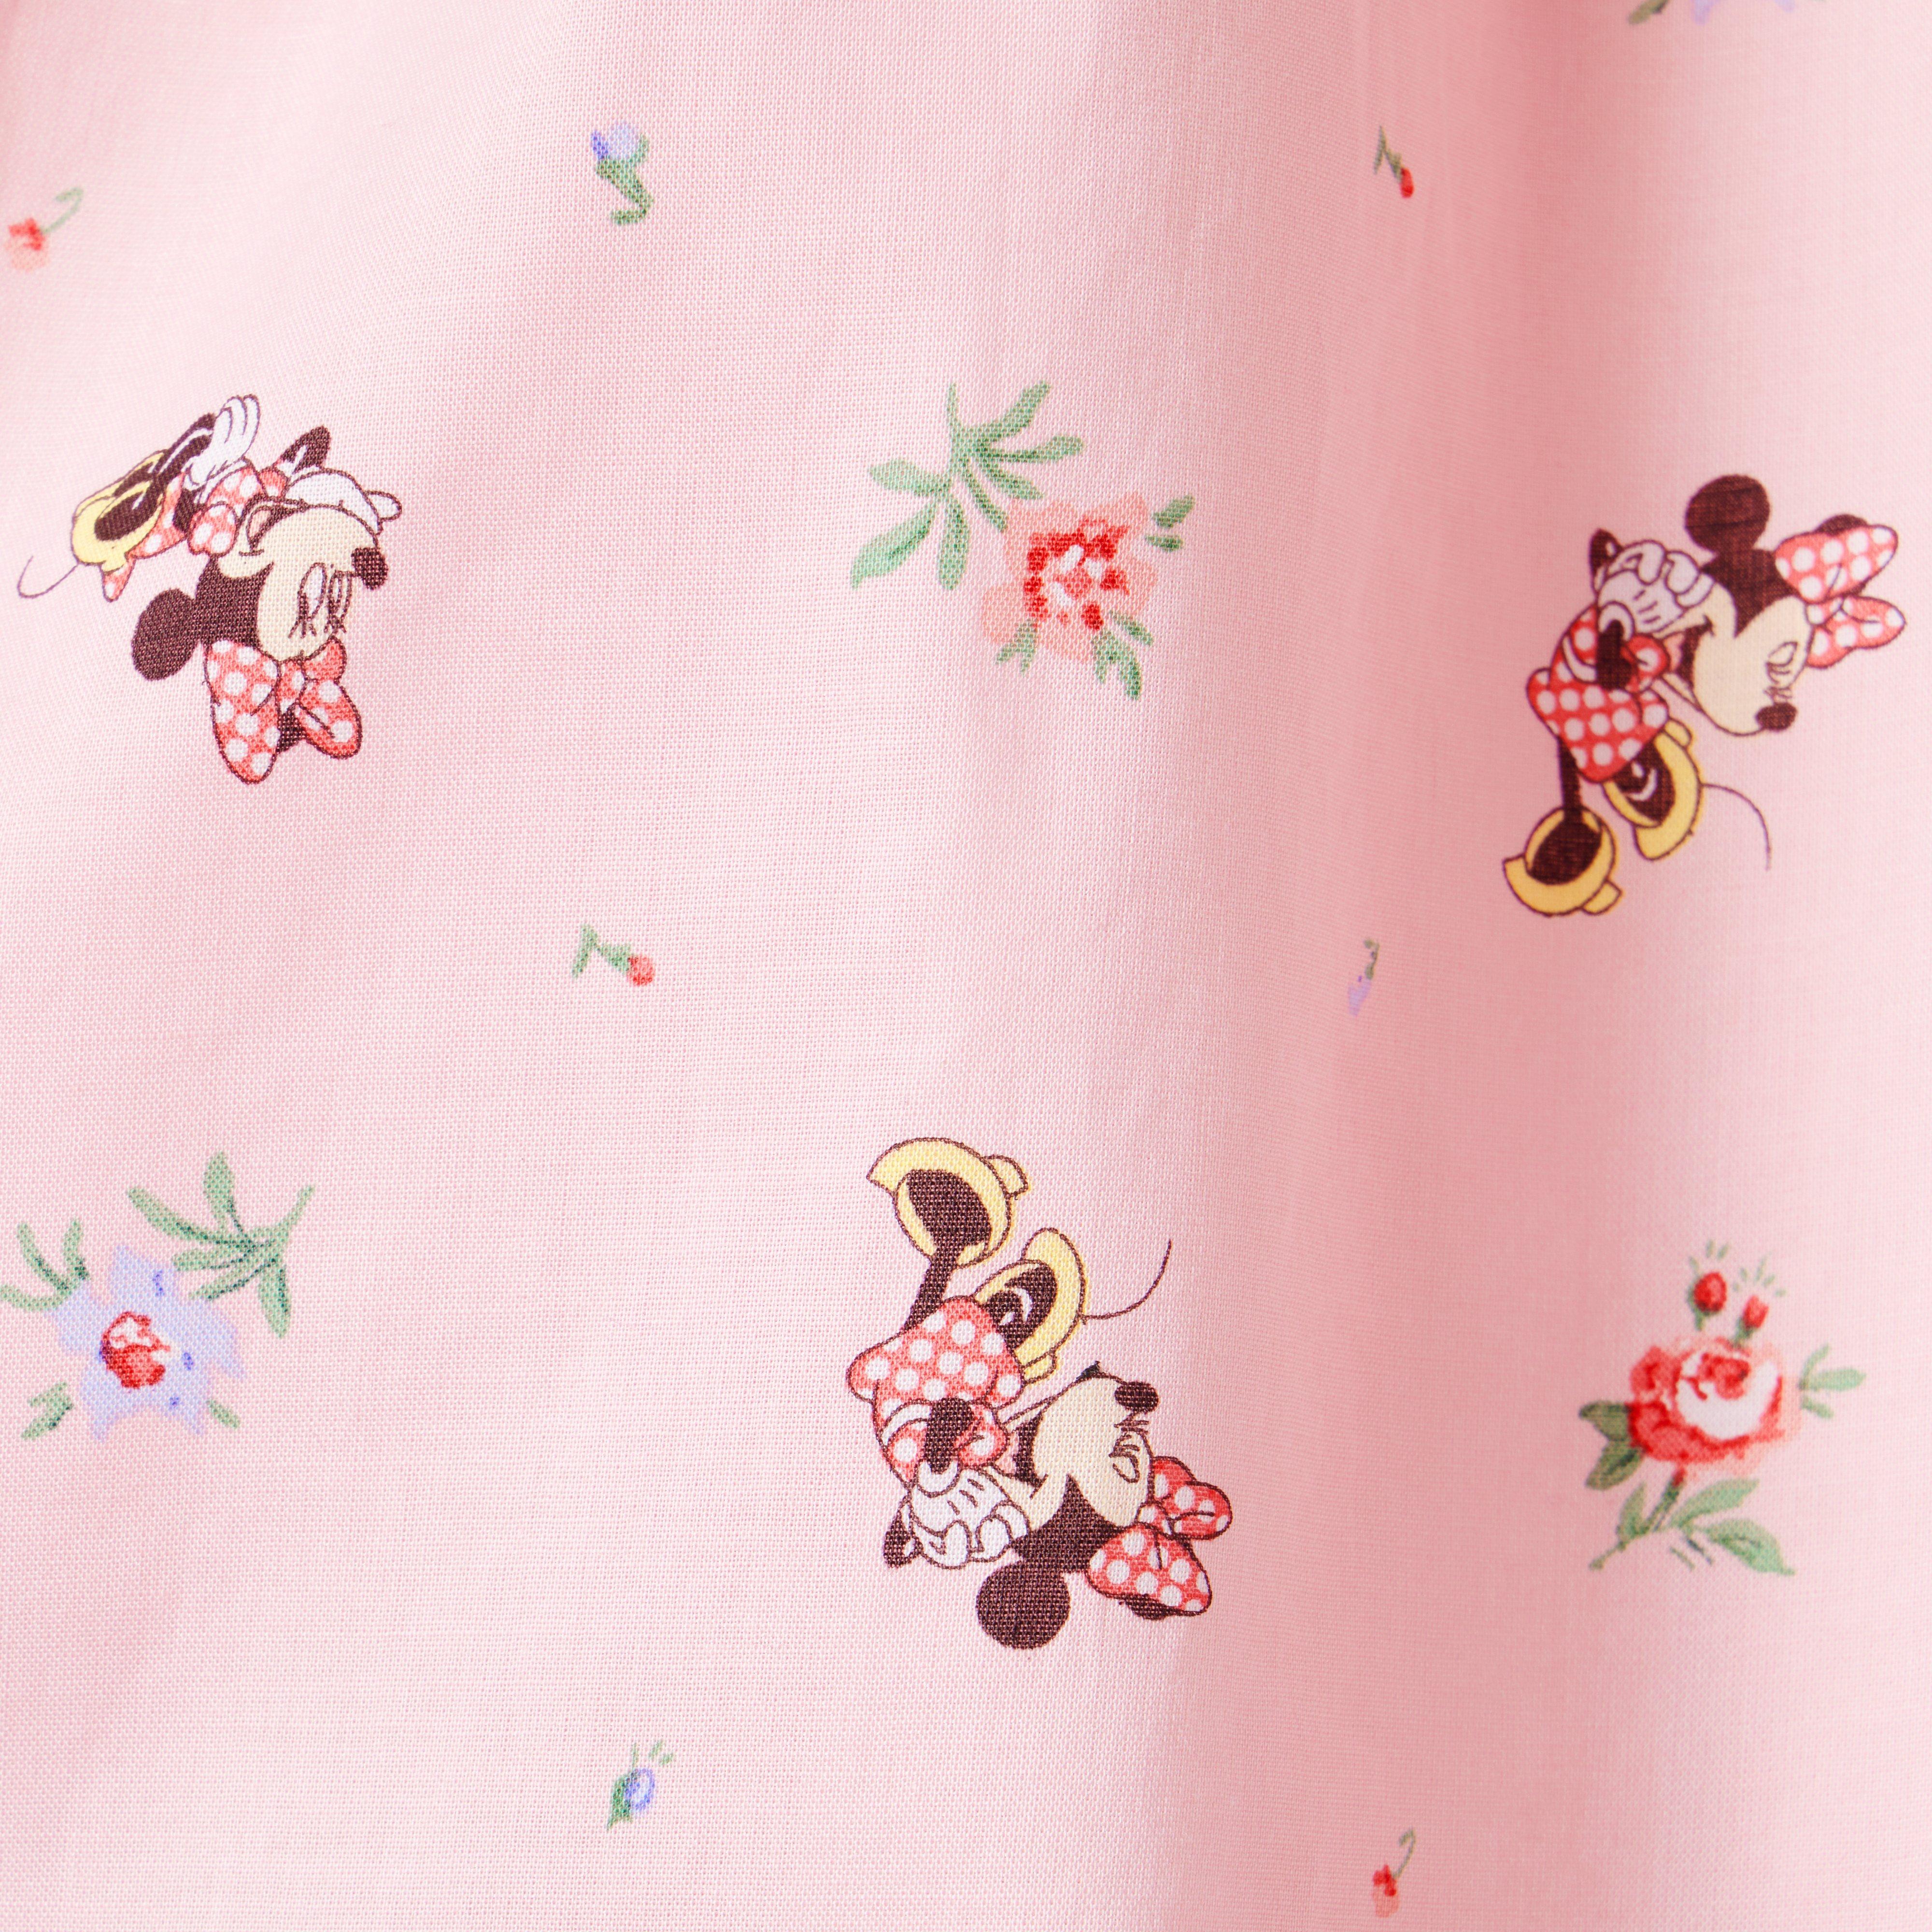 Disney Minnie Mouse Puff Sleeve Dress